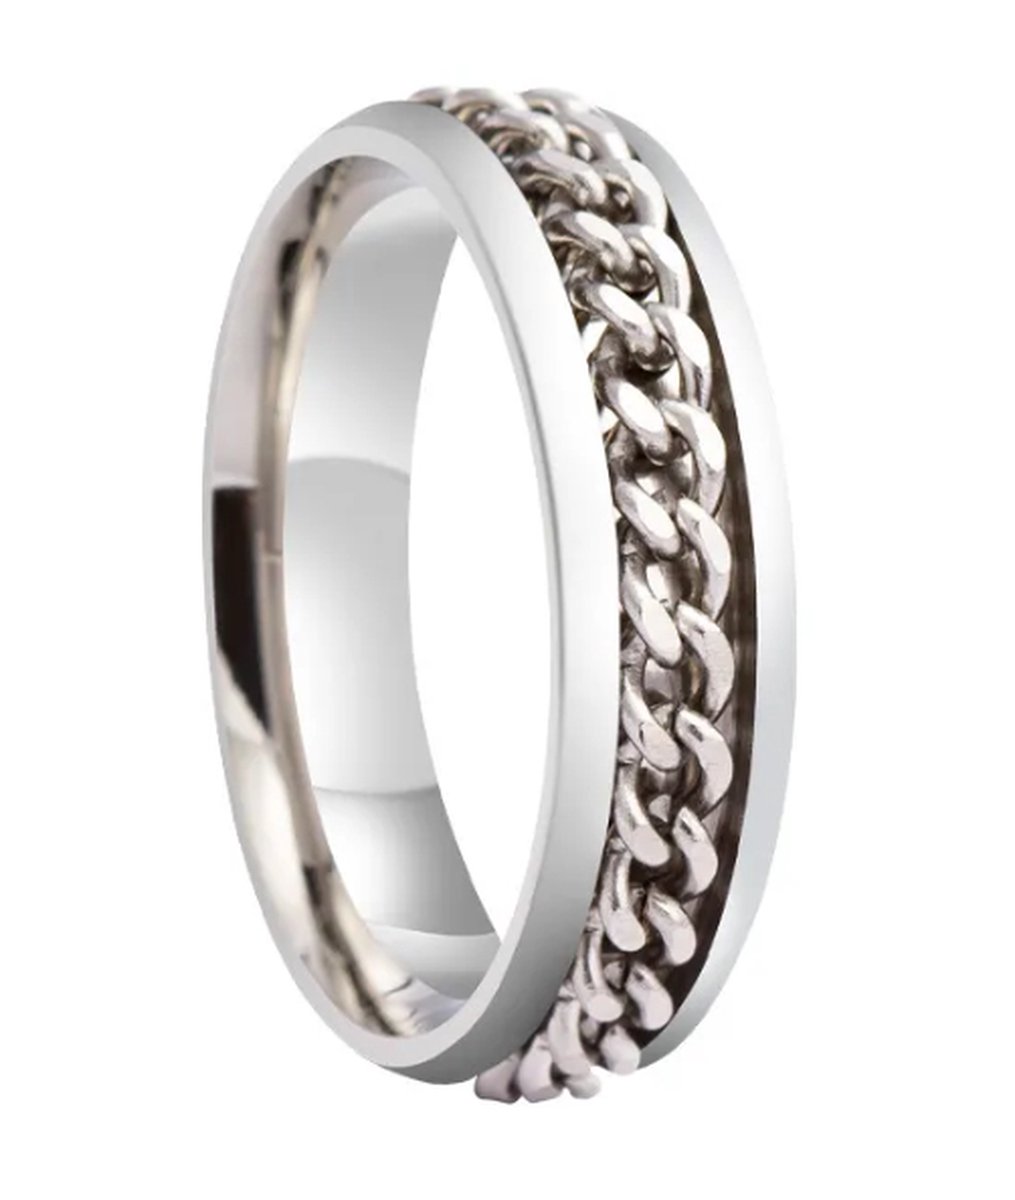 Plux Fashion Ketting Ring - Zilver - maat 60 - 1,9cm - Stainless Steel - Dames - Heren - Sieraden - Zilveren Ringen – Chain Ring - Sieraden Cadeau - Luxe Style - Duurzame Kwaliteit - Kerst - Black Friday